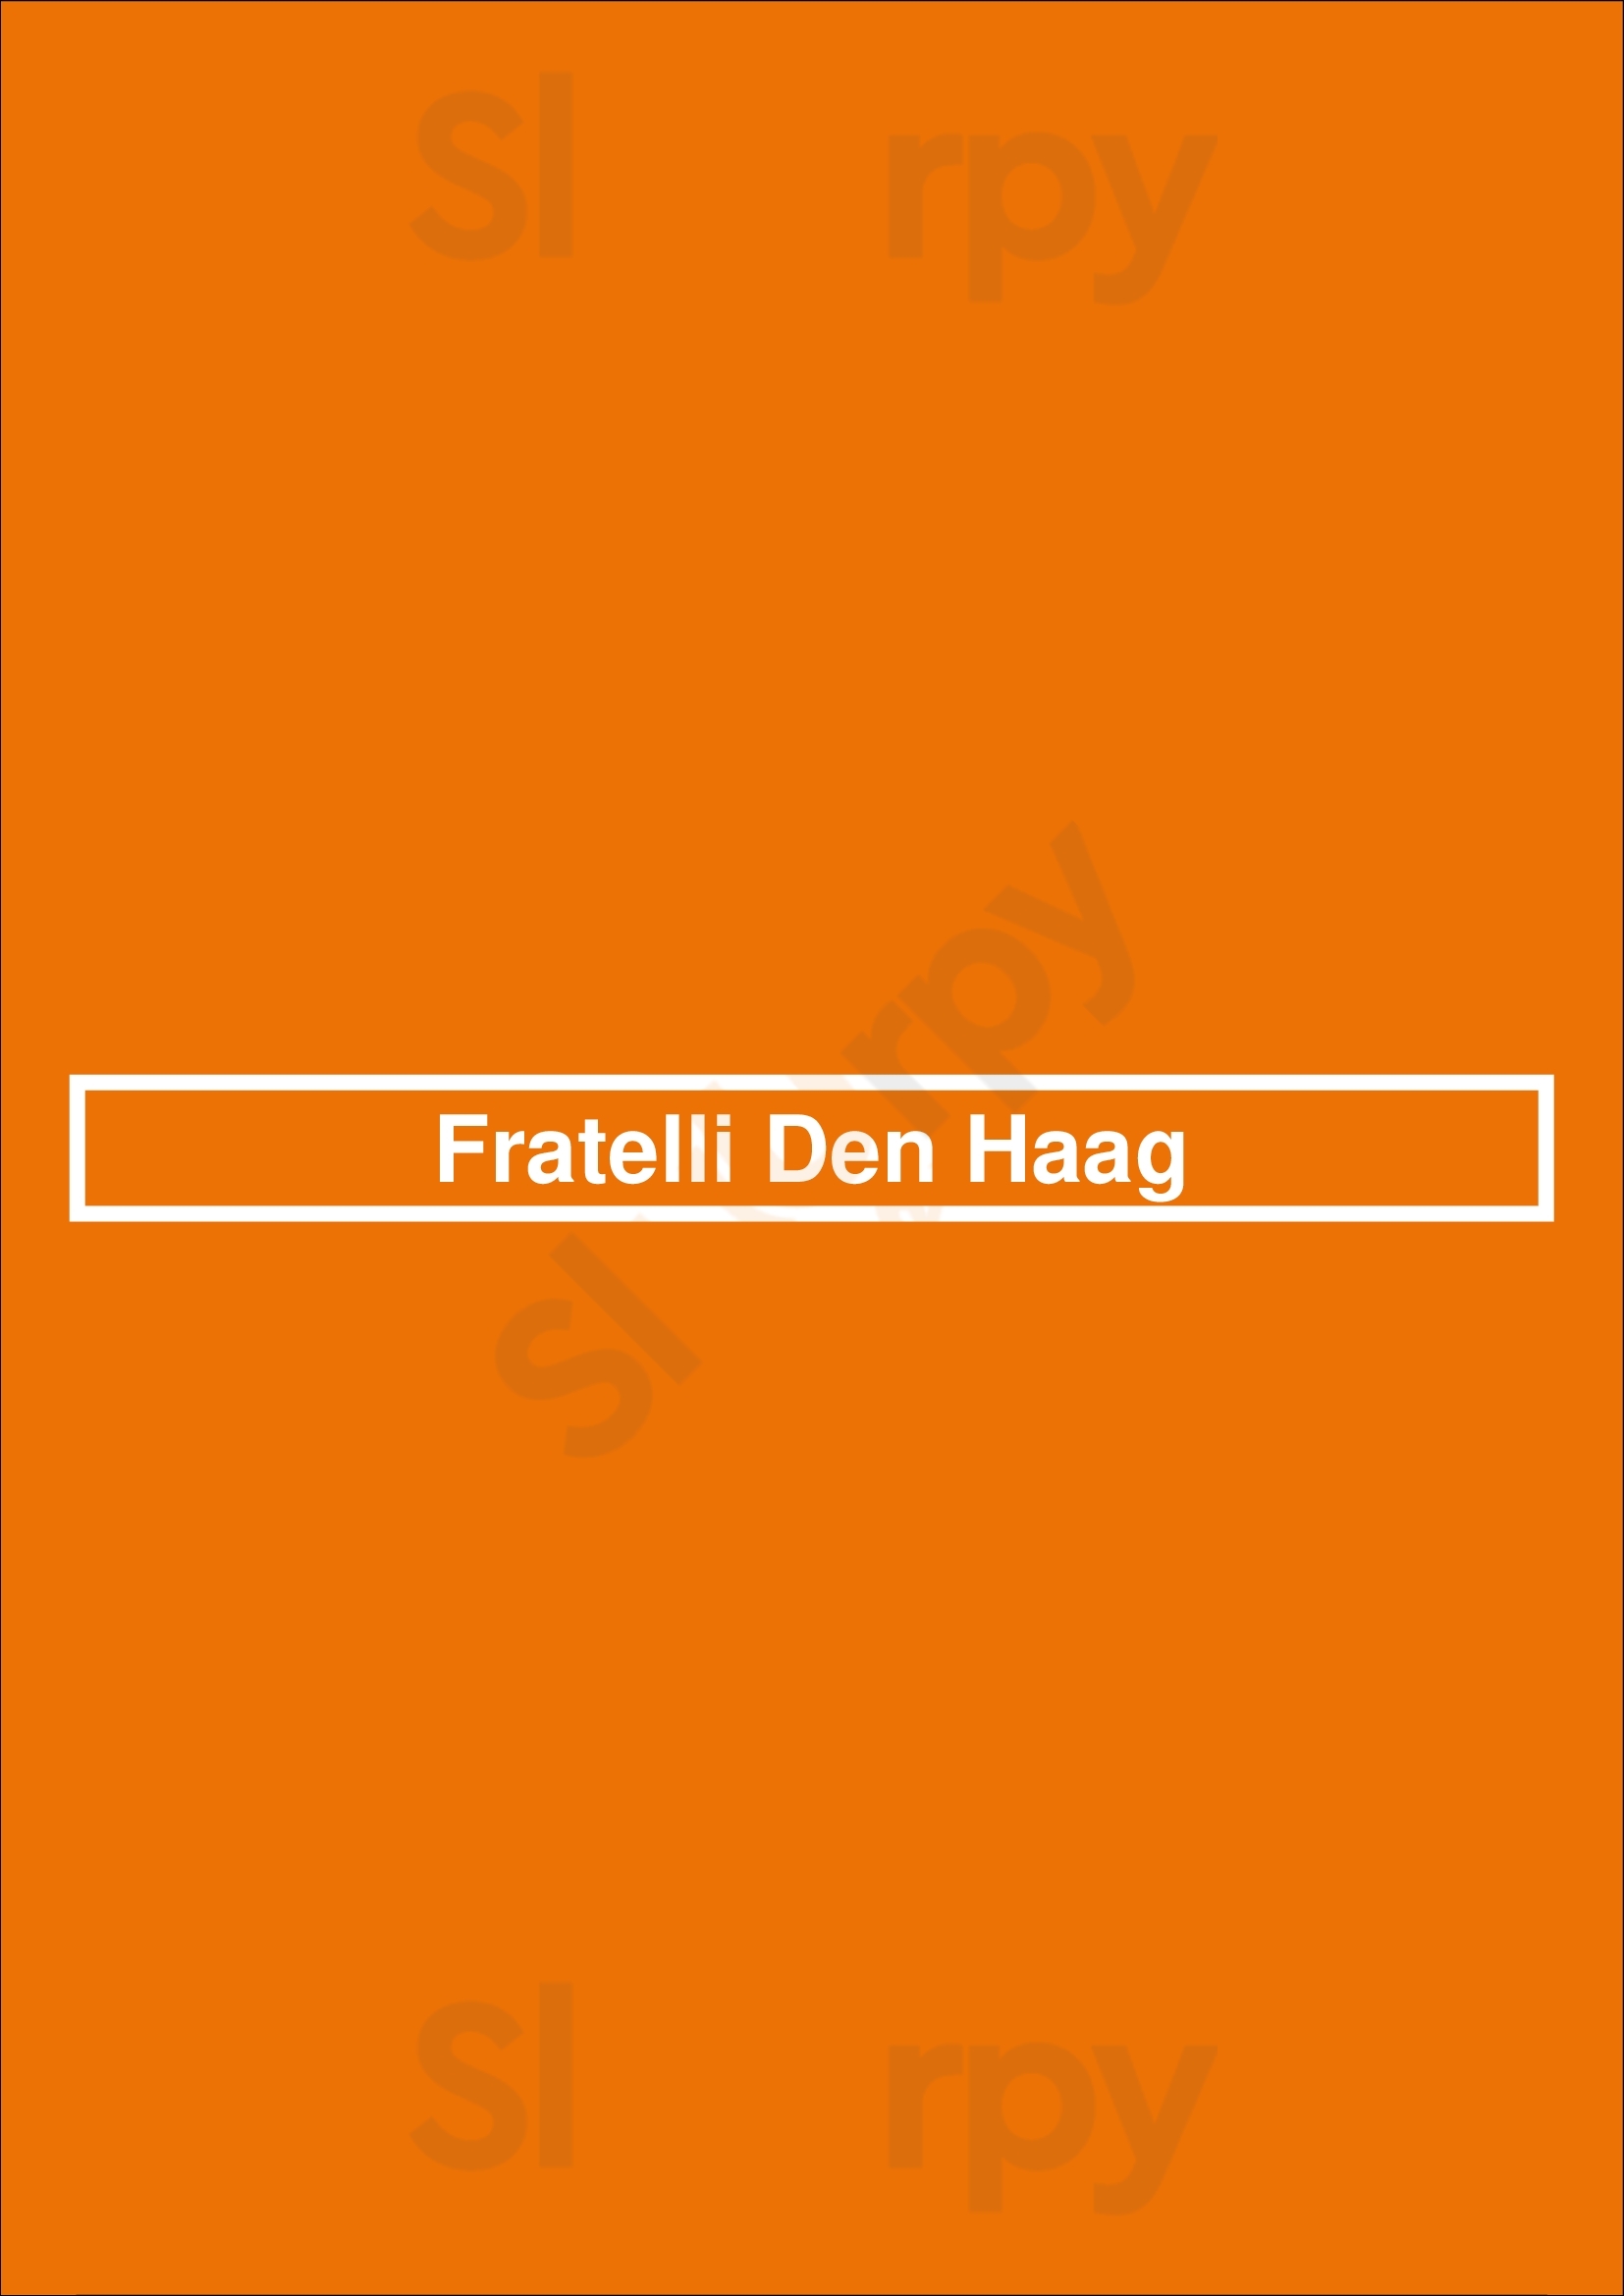 Fratelli Den Haag Den Haag Menu - 1